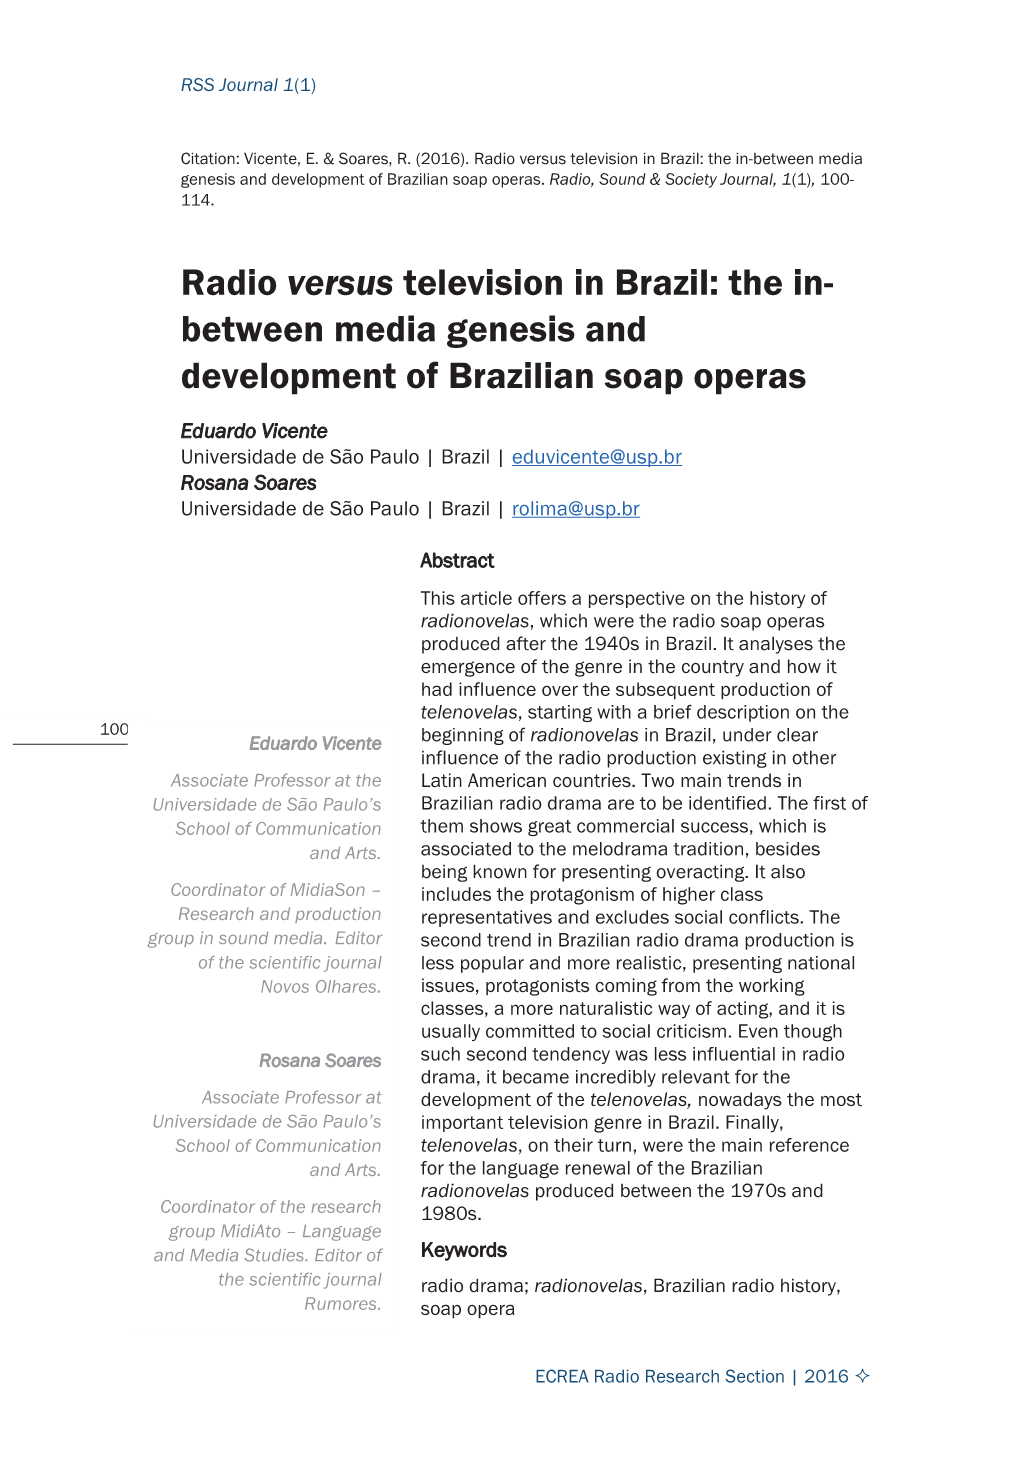 Radio Versus Television in Brazil: the In-Between Media Genesis and Development of Brazilian Soap Operas